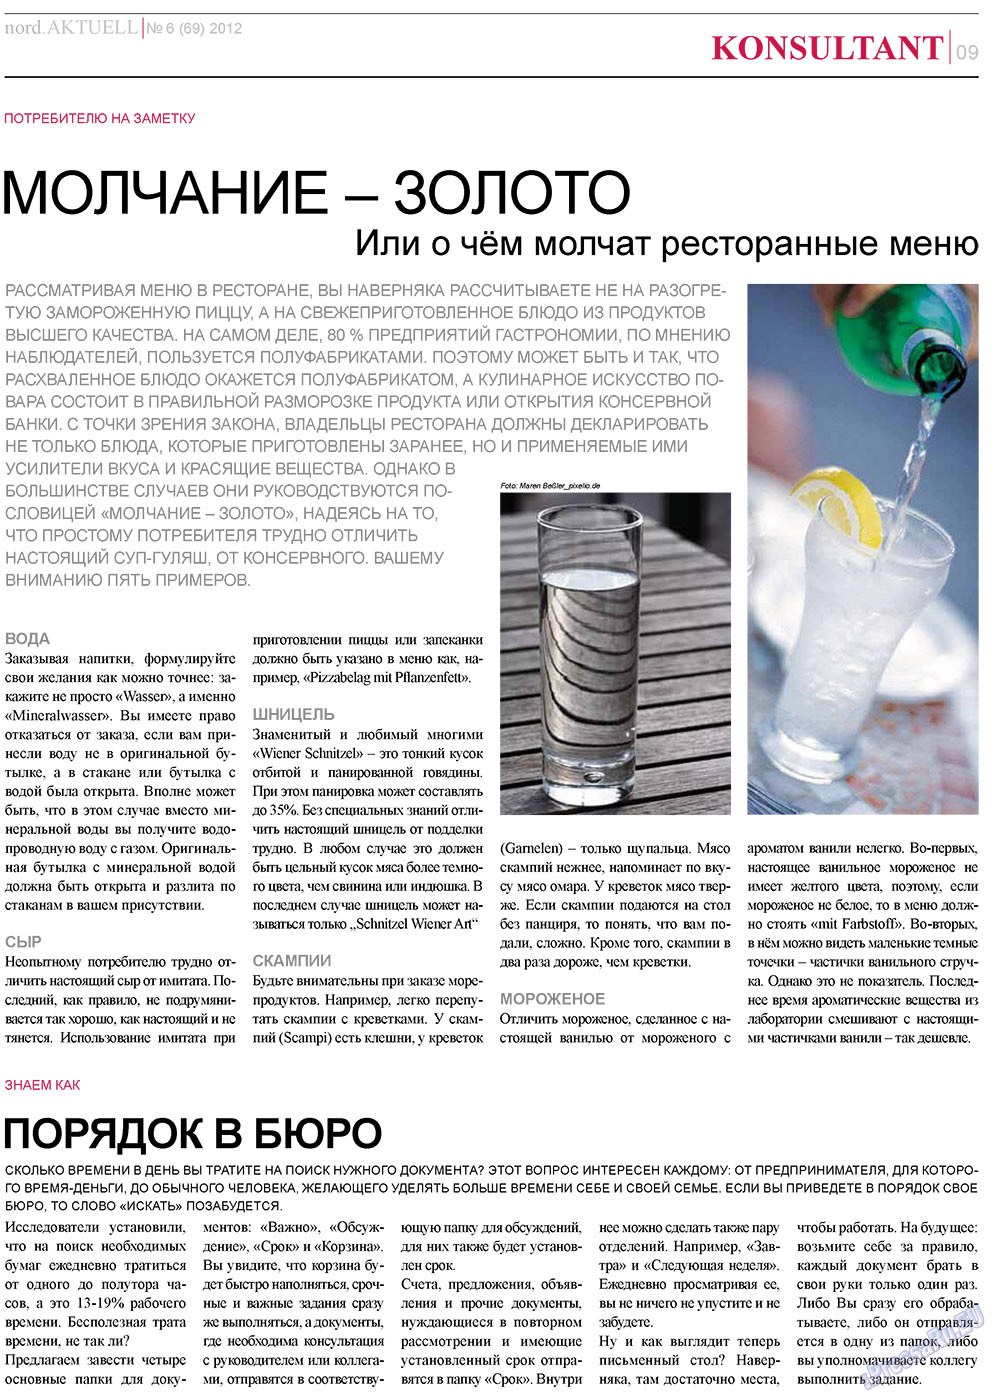 nord.Aktuell, газета. 2012 №6 стр.9